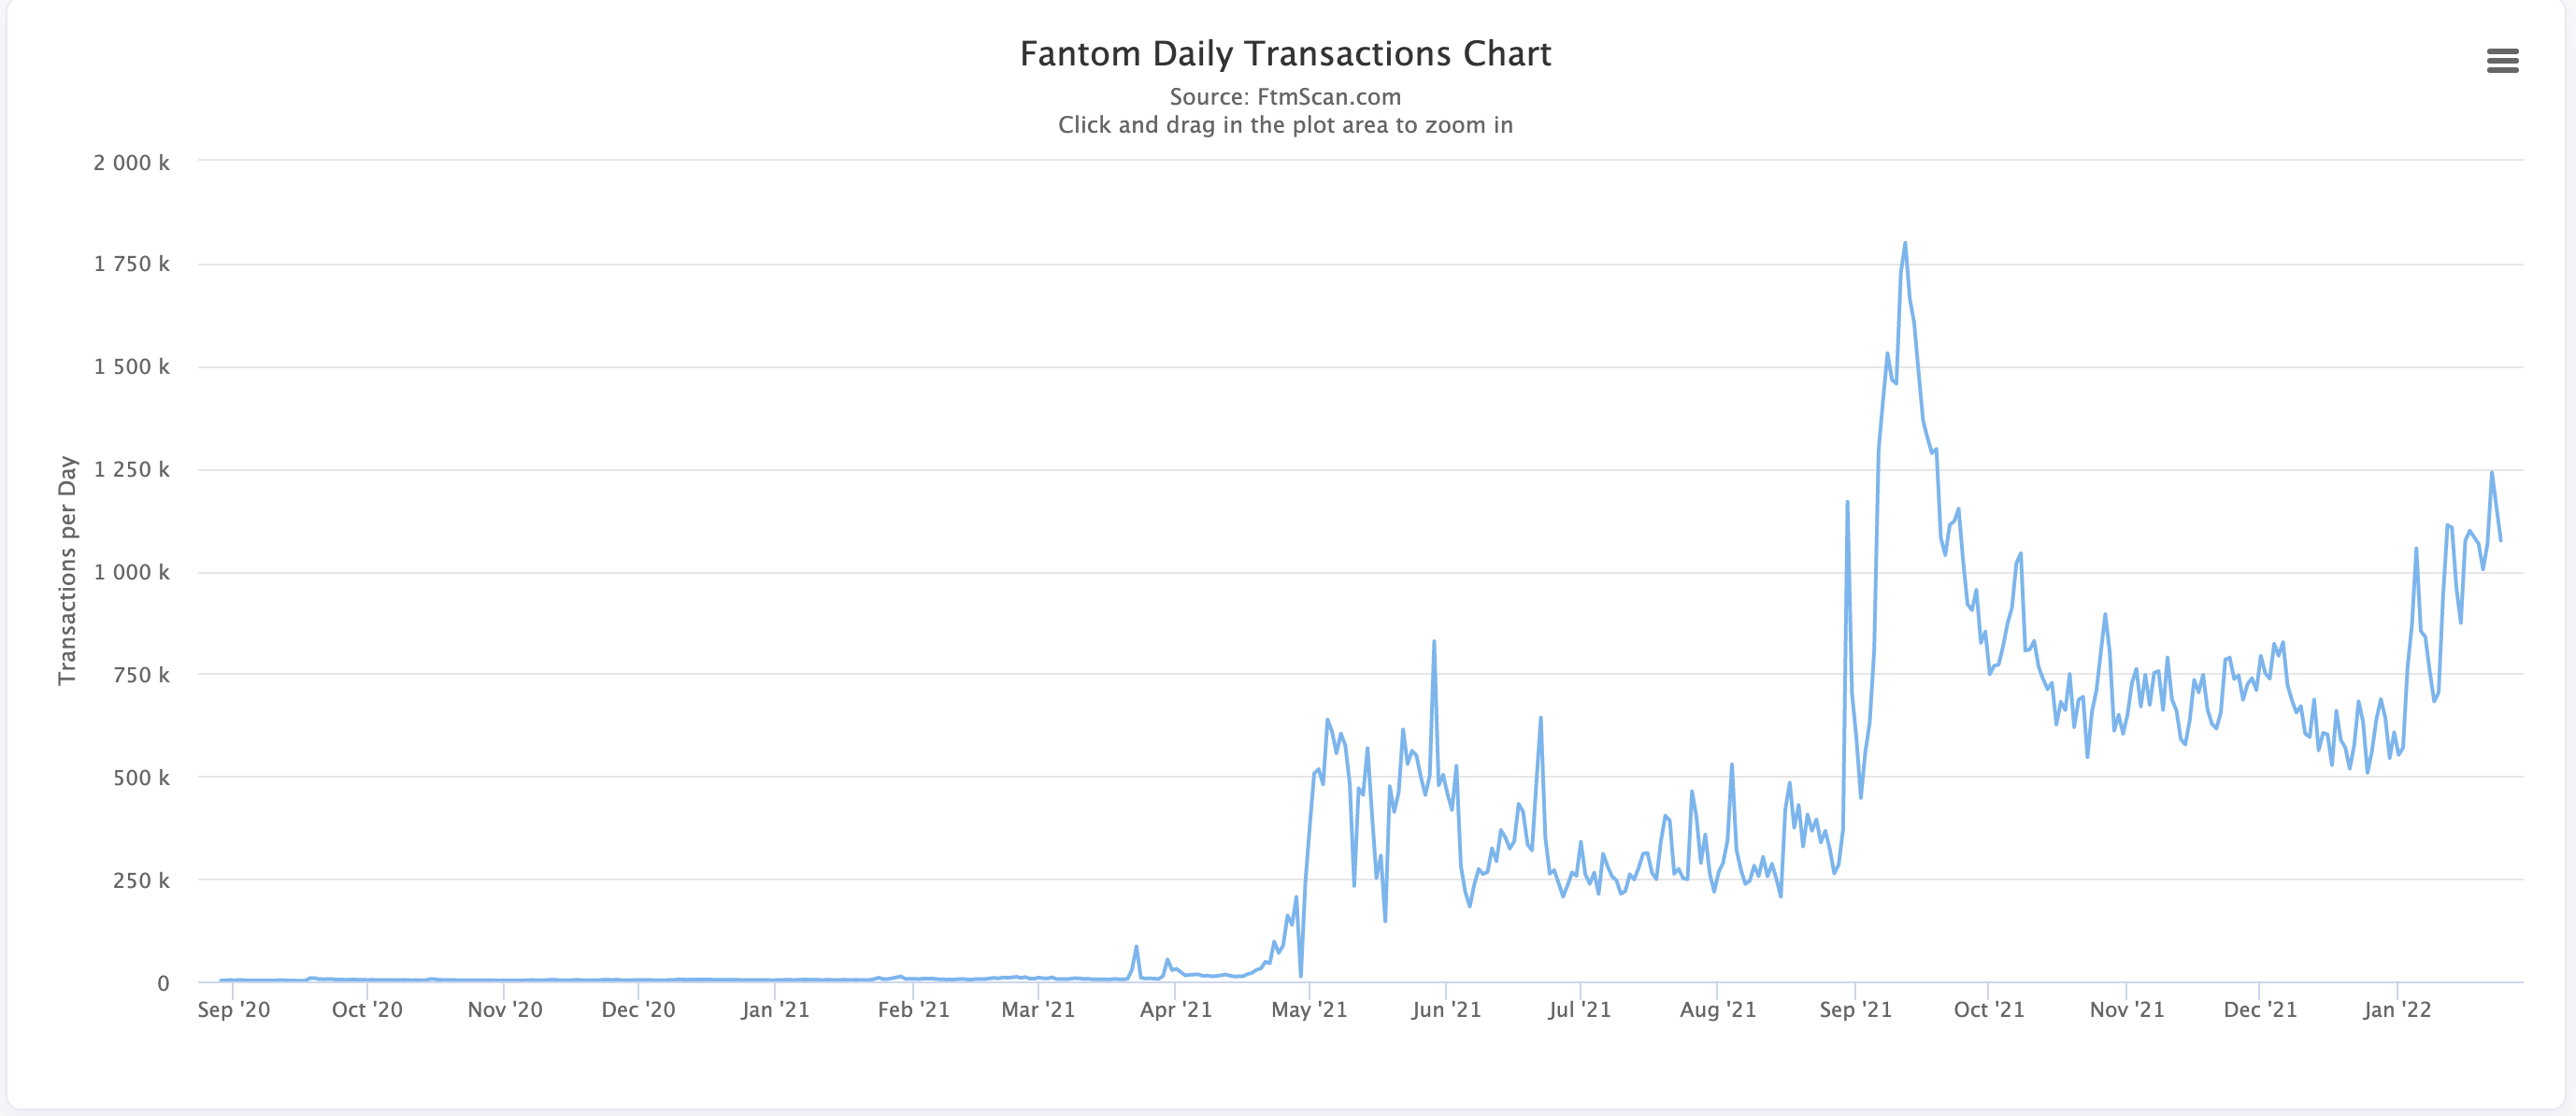 Fantom Daily Transactions Chart